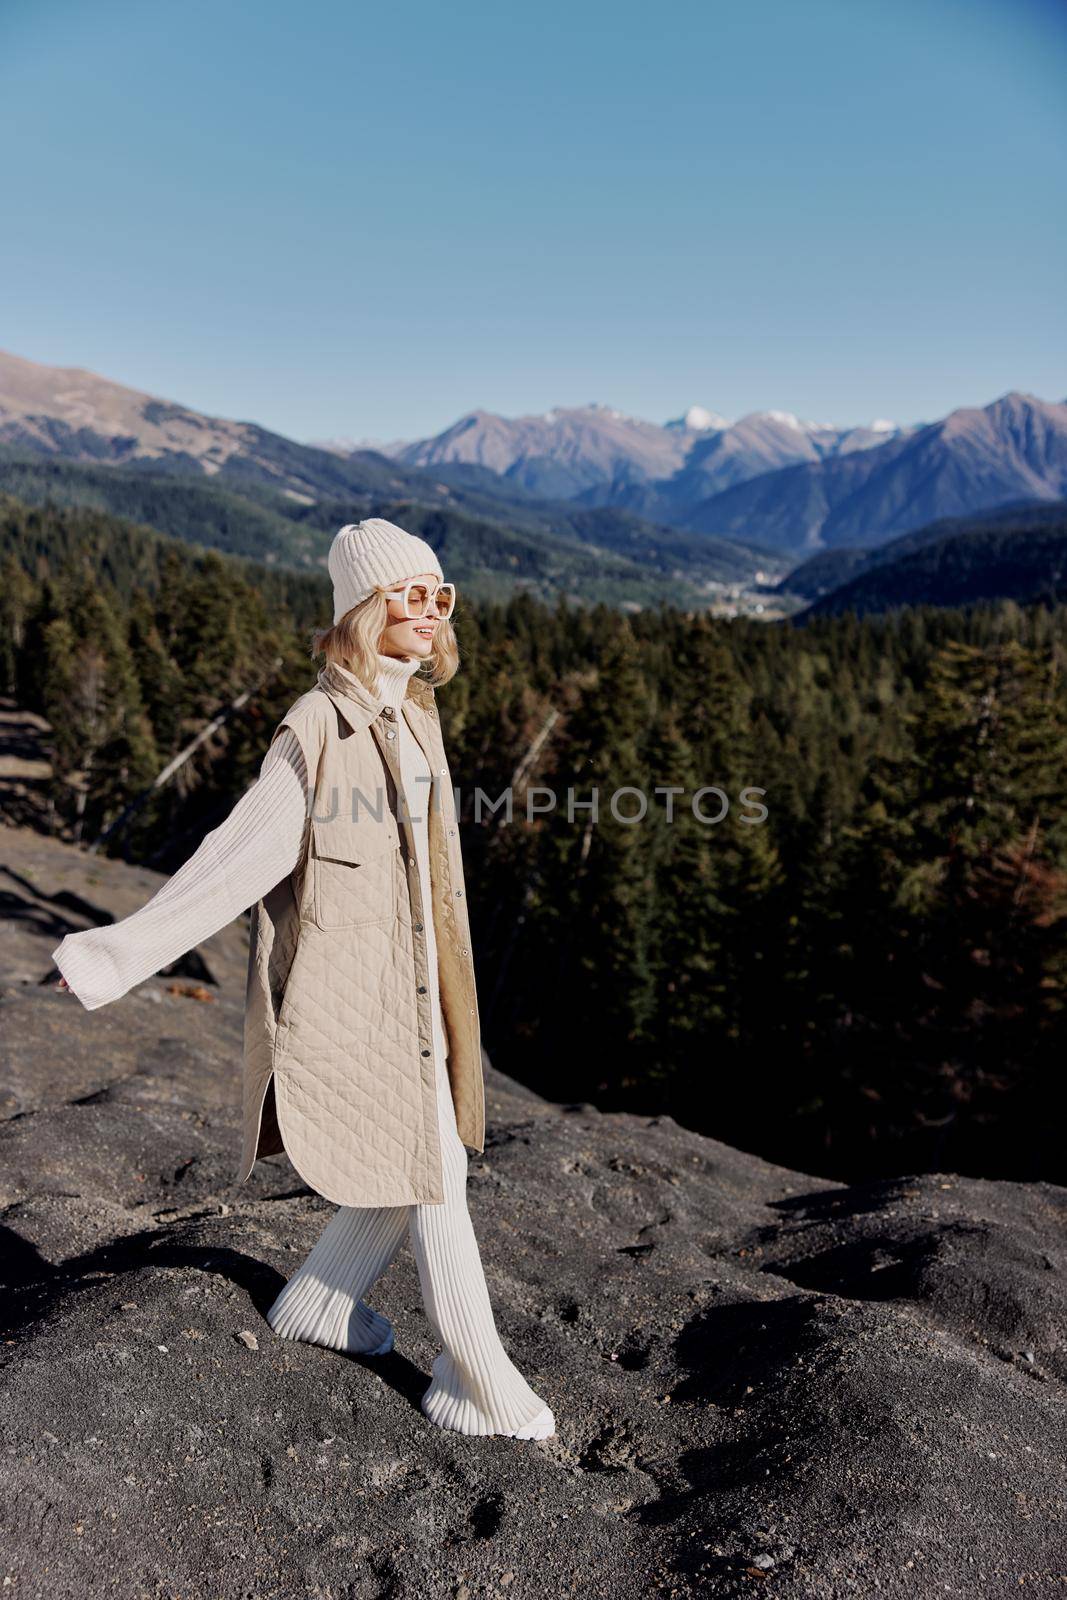 tourist fashion clothes mountains landscape nature lifestyle. High quality photo